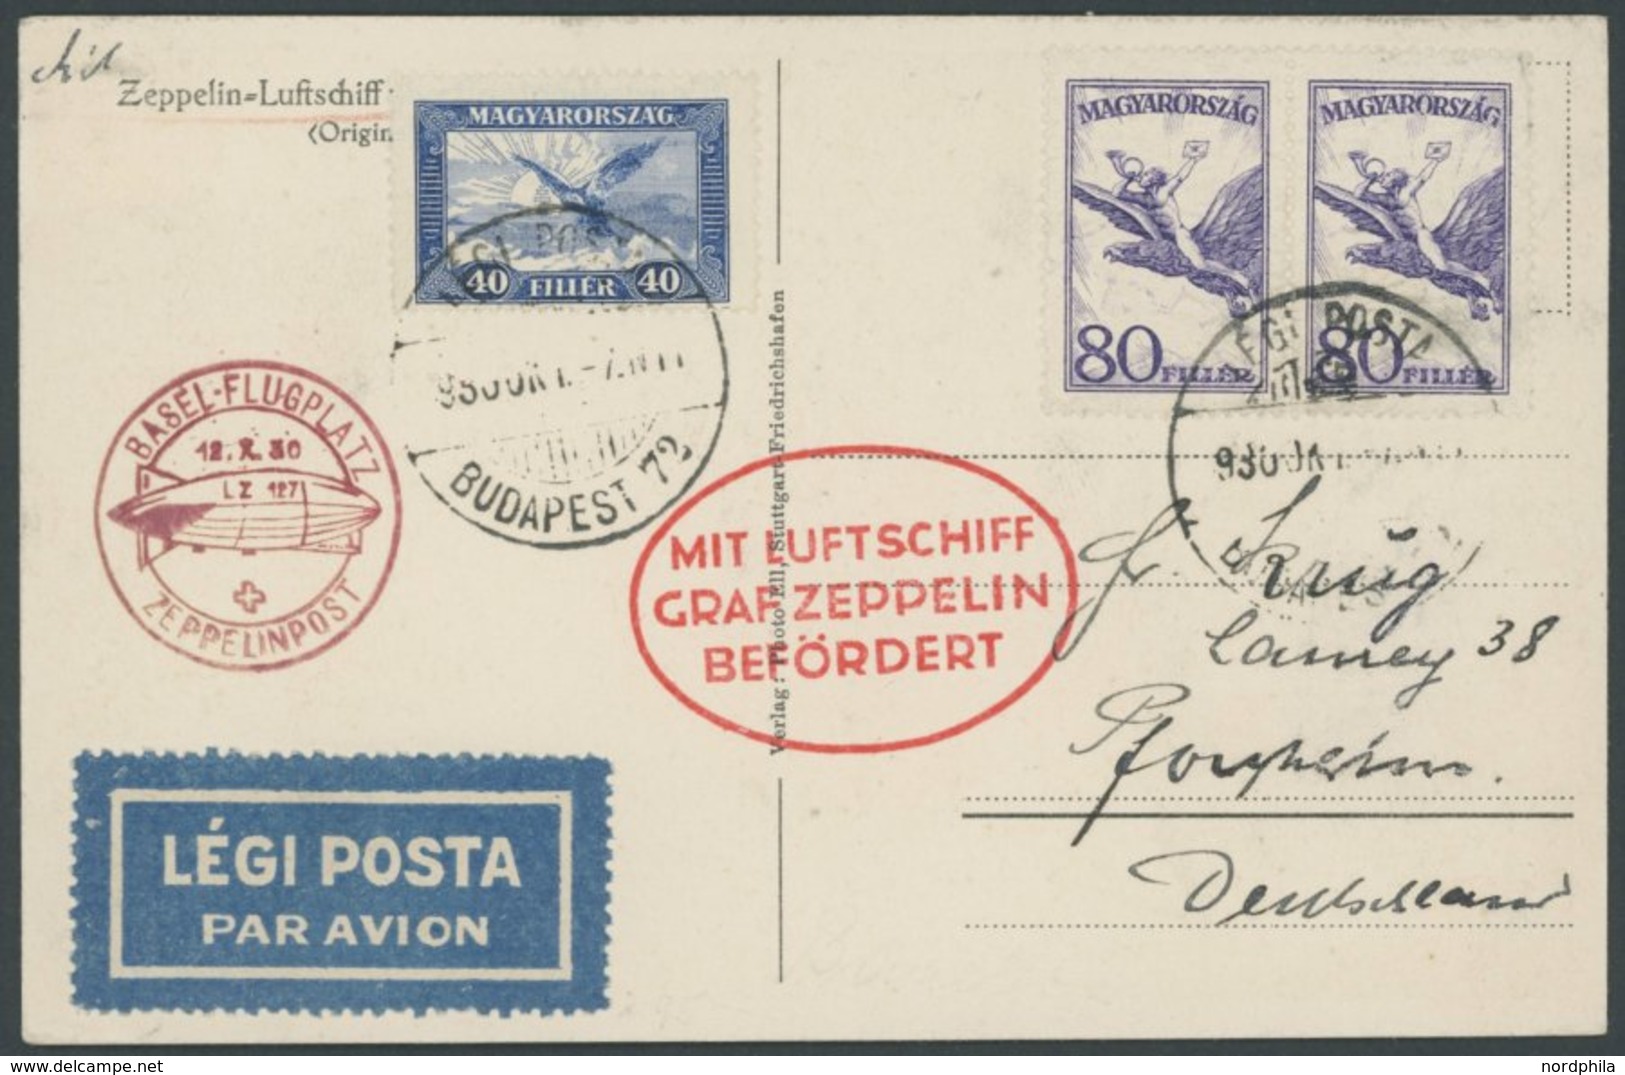 ZULEITUNGSPOST 93B BRIEF, Ungarn: 1930, Landungsfahrt Nach Basel, Braunroter Ankunftsstempel, Prachtkarte, R! - Correo Aéreo & Zeppelin